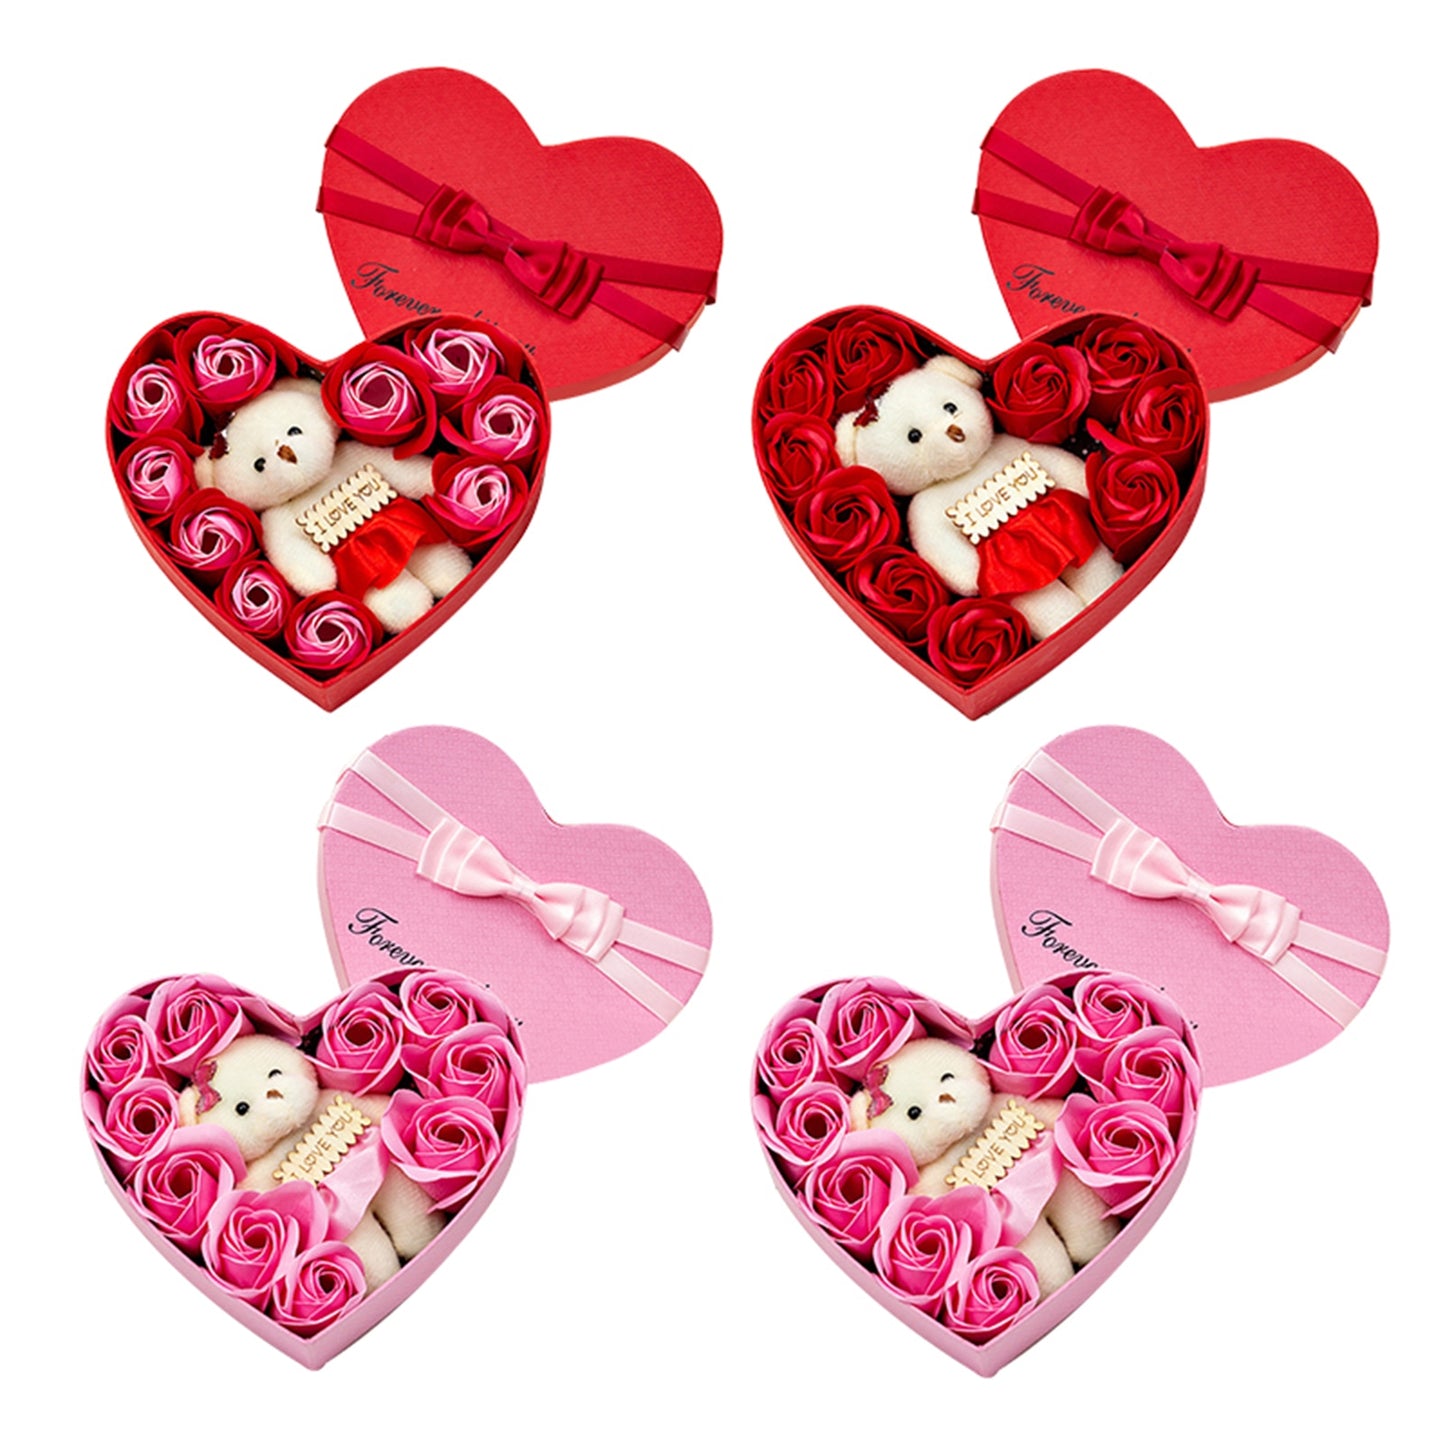 Heart-shaped Soap Flower Gift Box with Teddy Bear - Tortuna